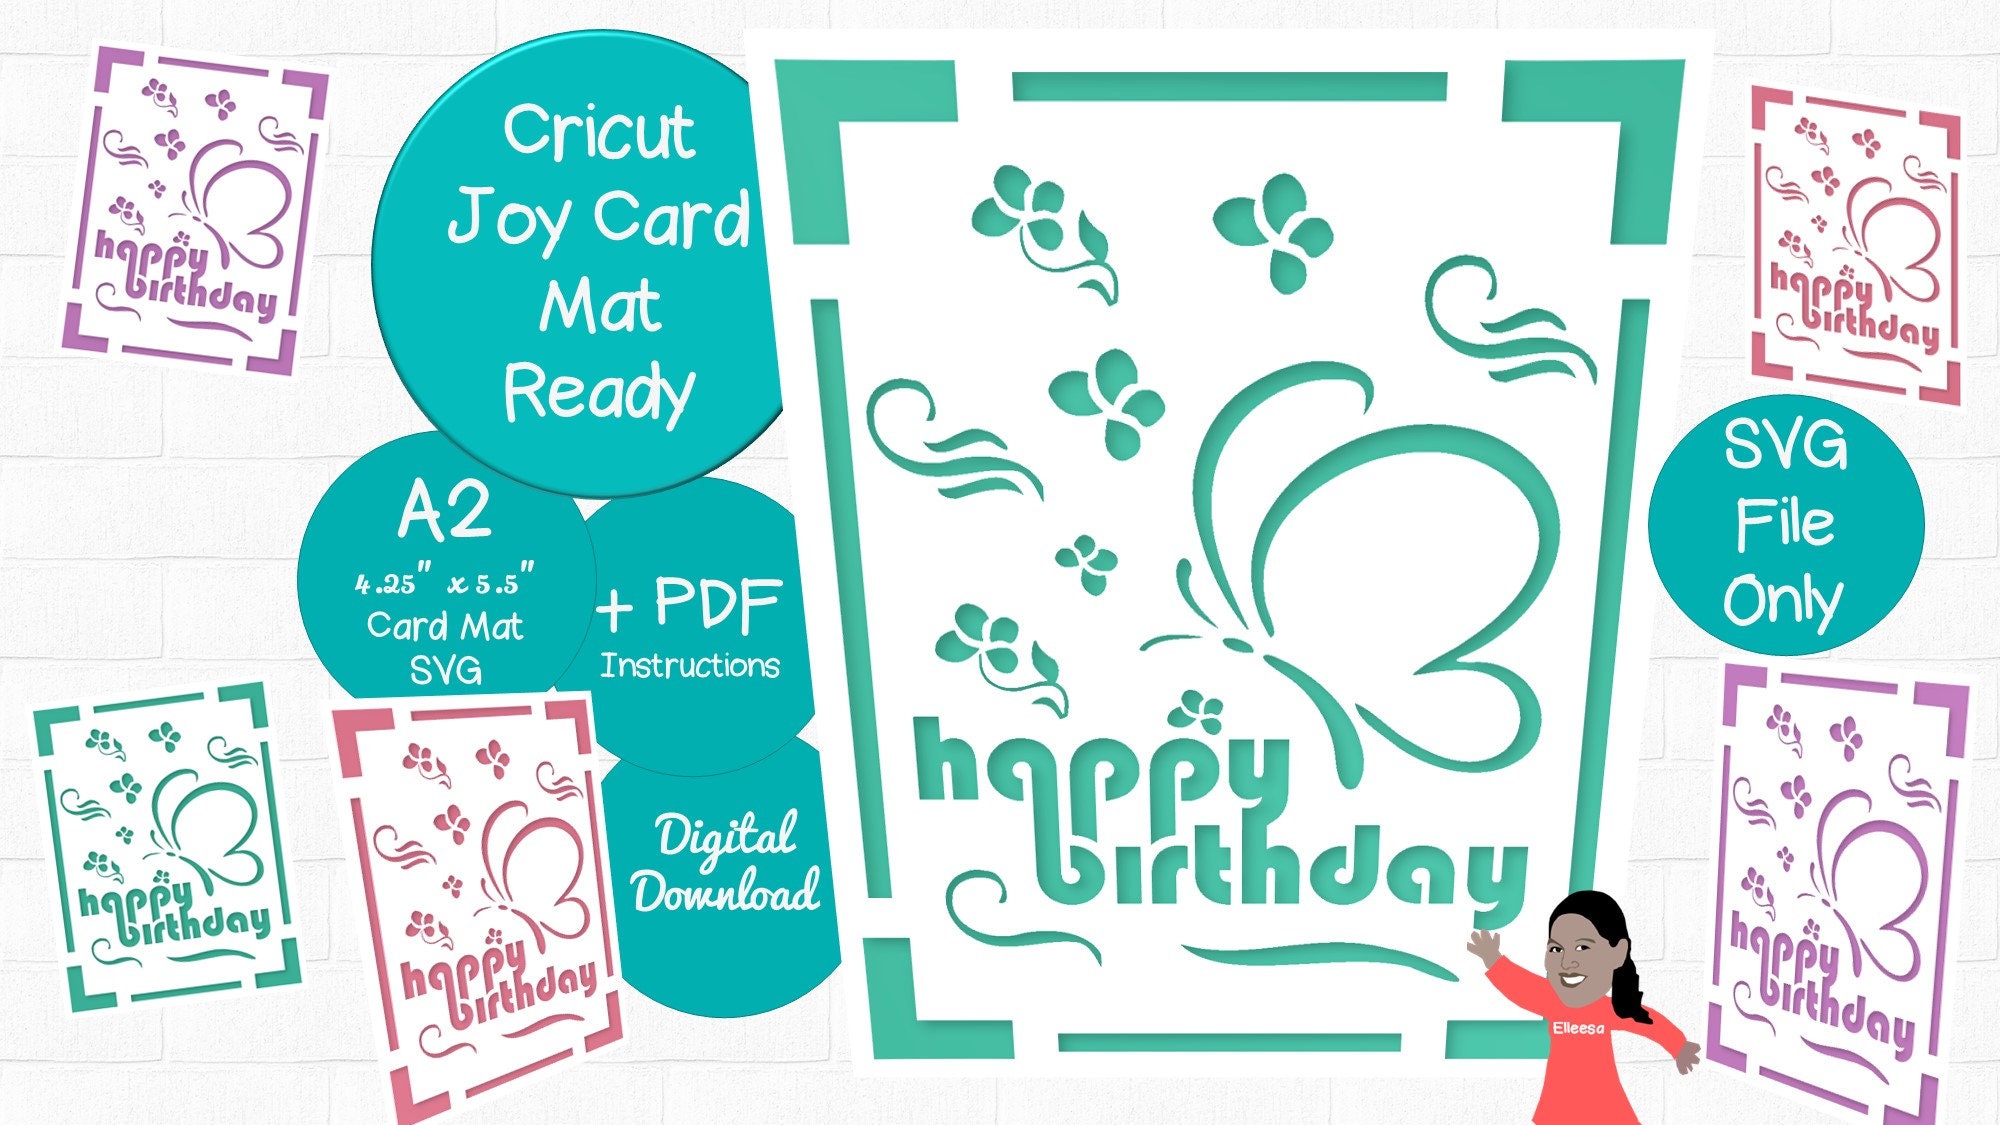 Cricut Joy Card Mat, 4.5 x 6.25